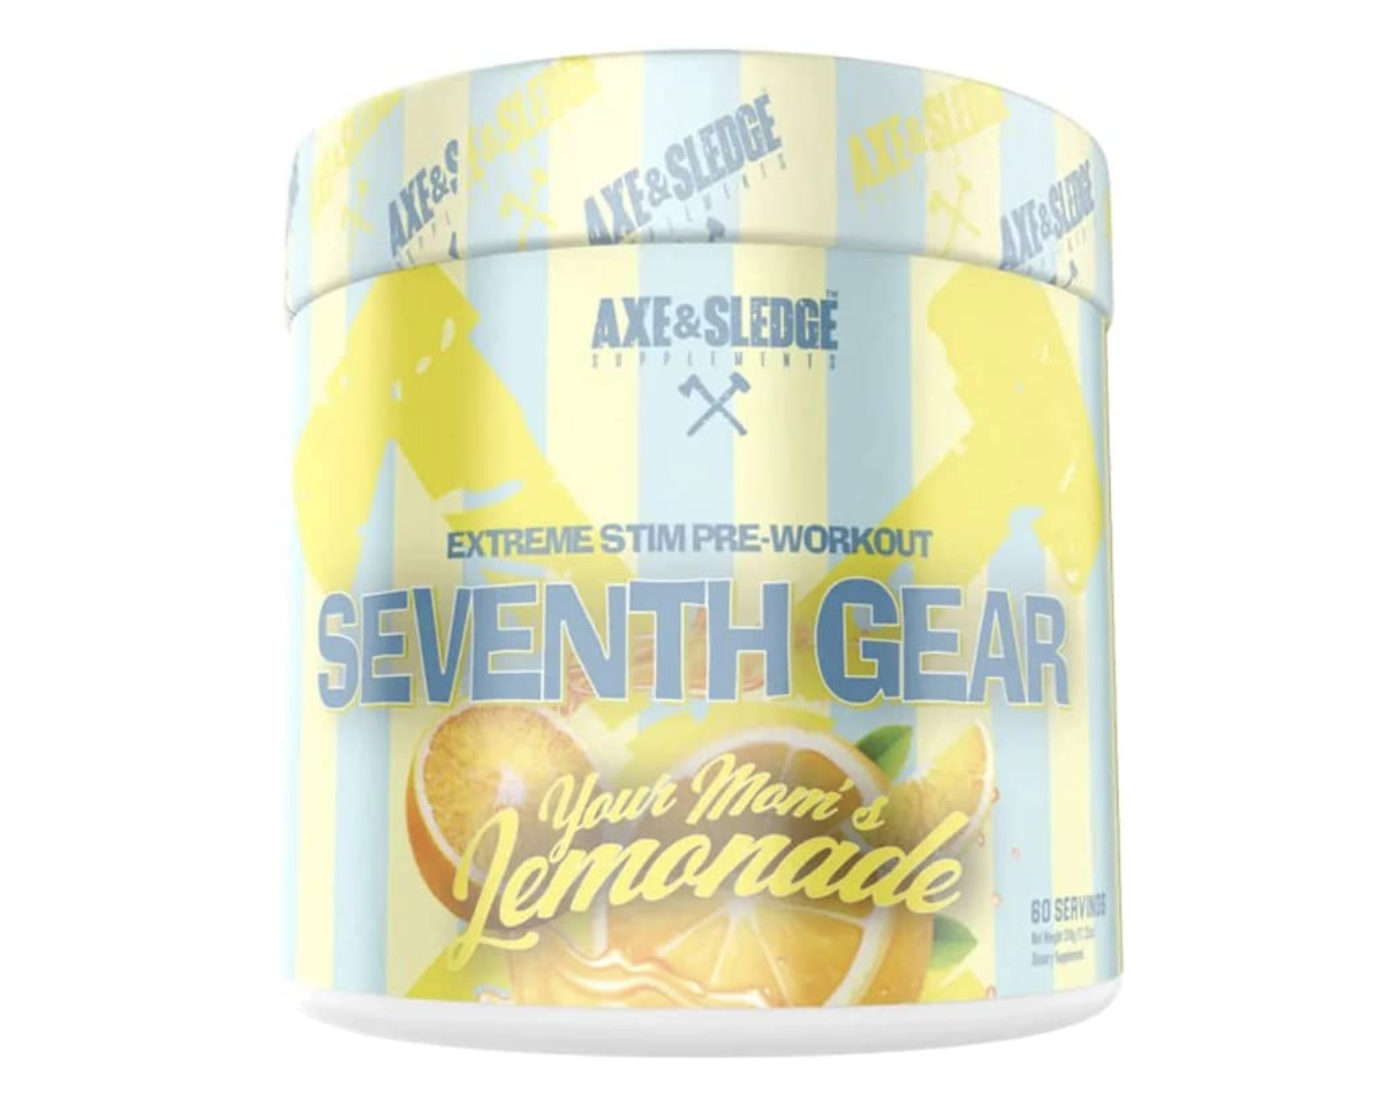 Seventh Gear, Lemonade